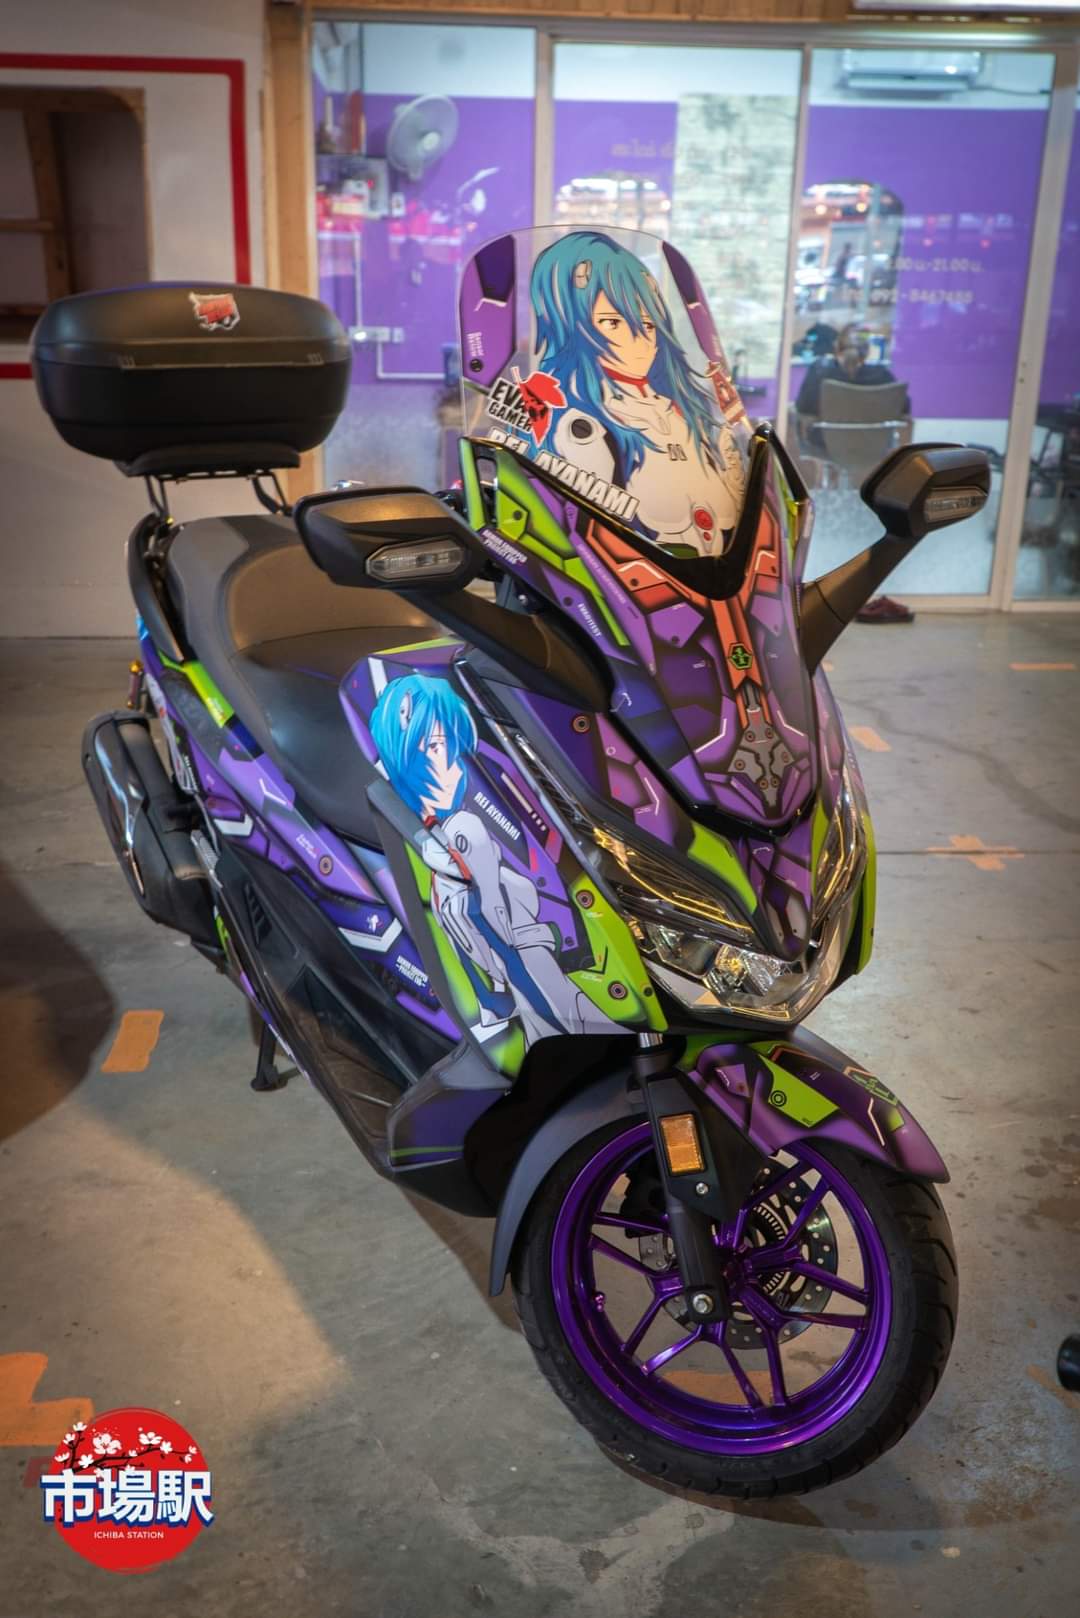 Itasha Melbourne, Itasha and Itansha, Anime Motorcycles Scooters